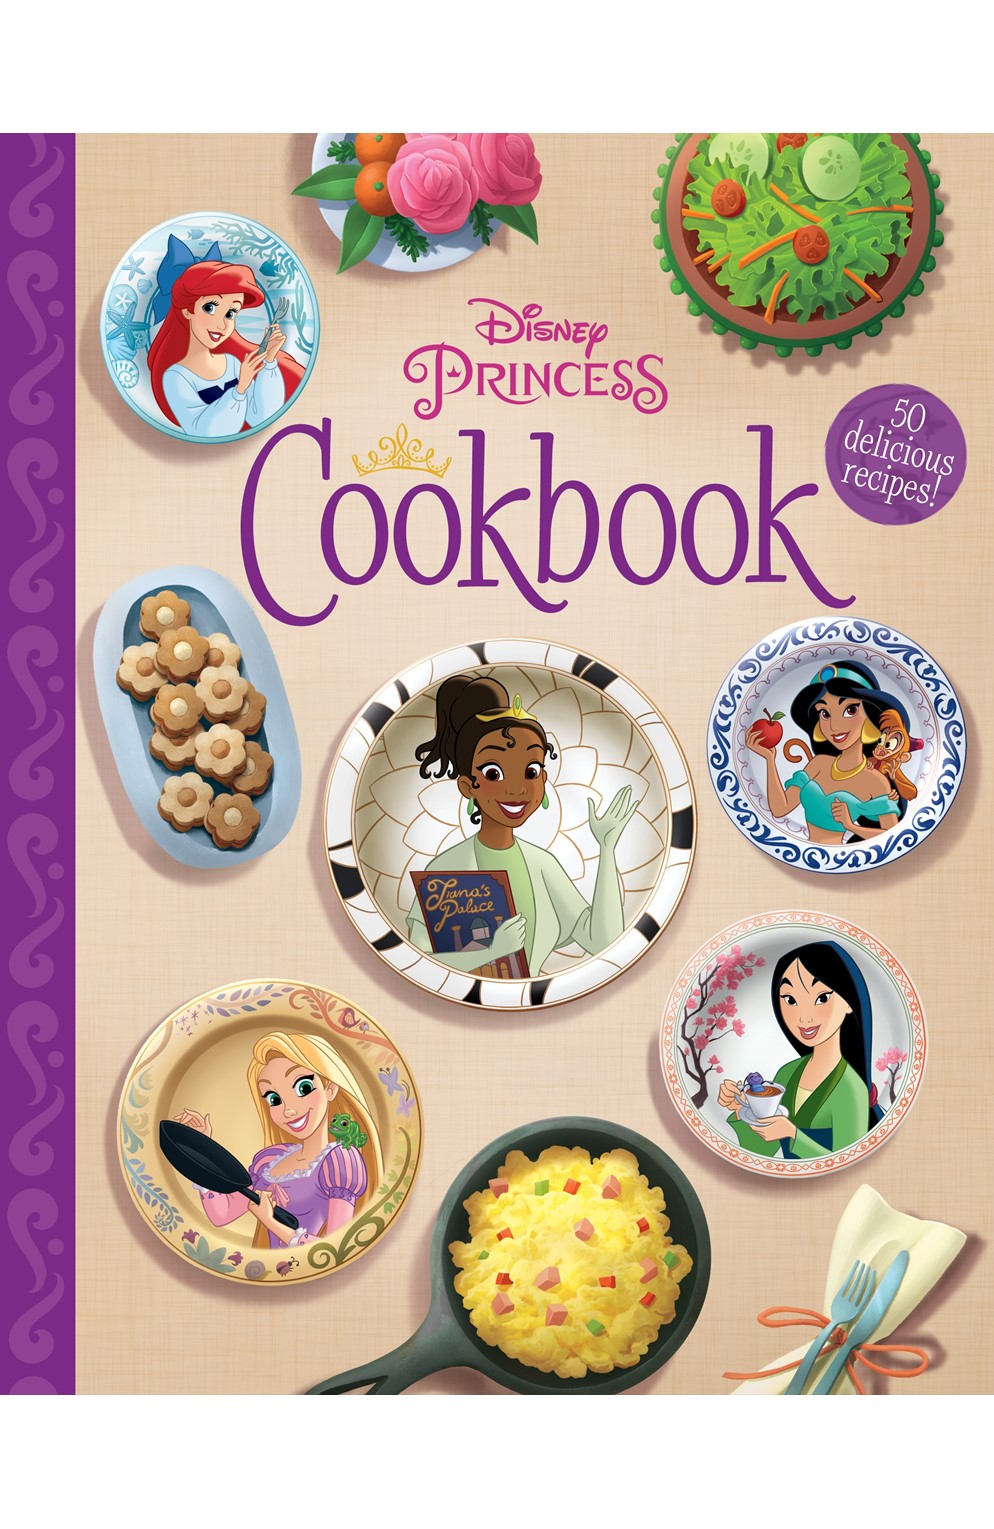 The Disney Princess Cookbook
